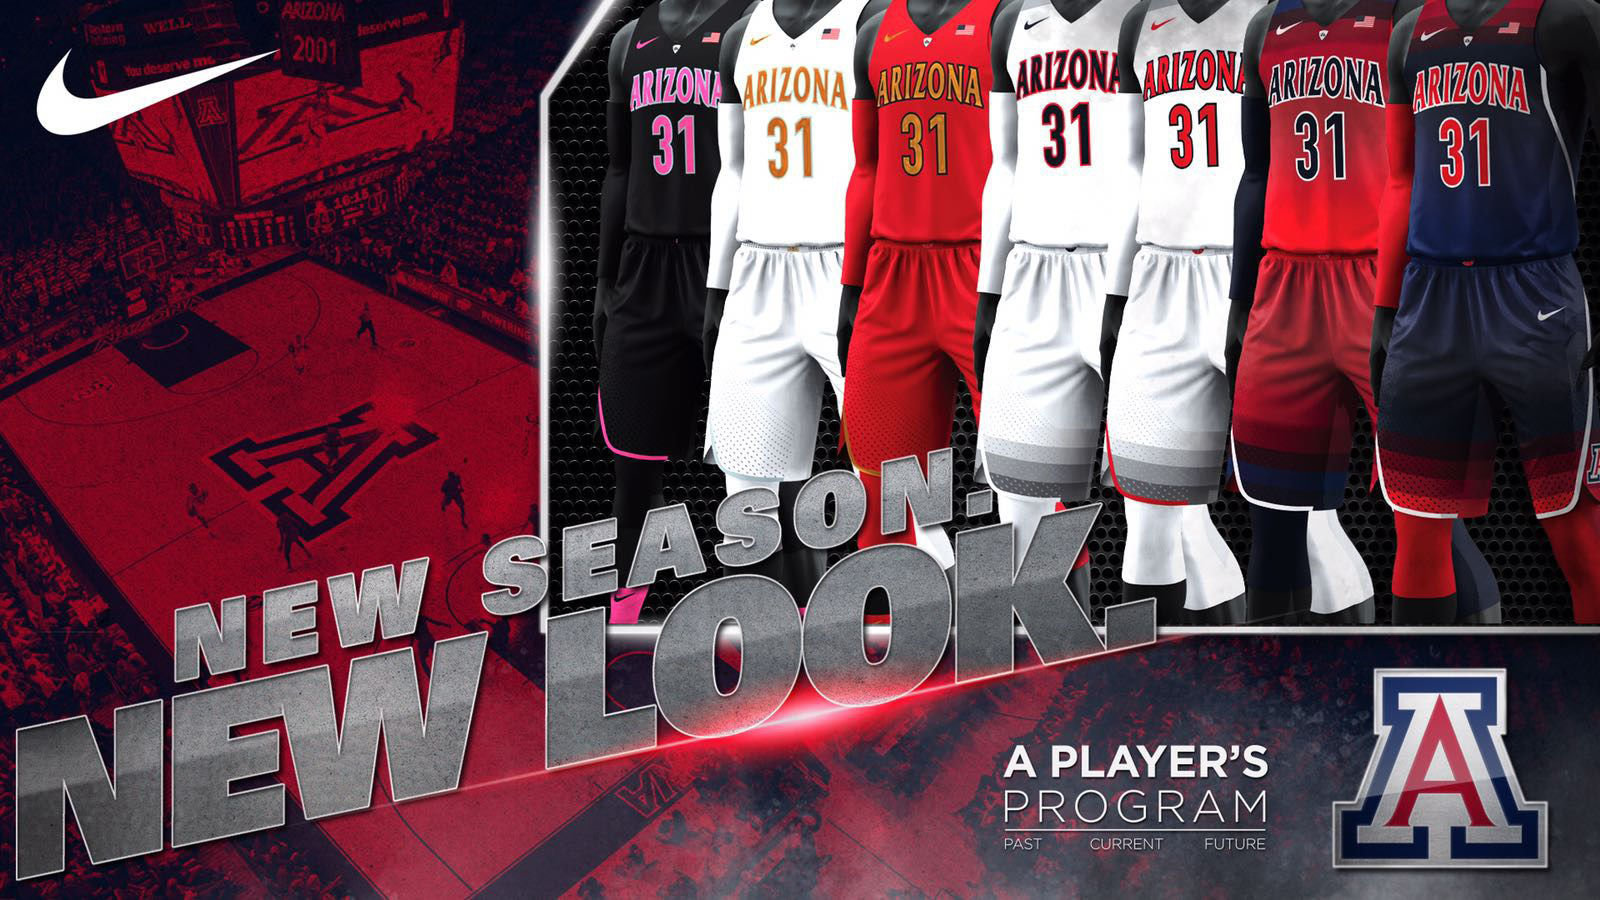 Arizona Wildcats' basketball uniforms 